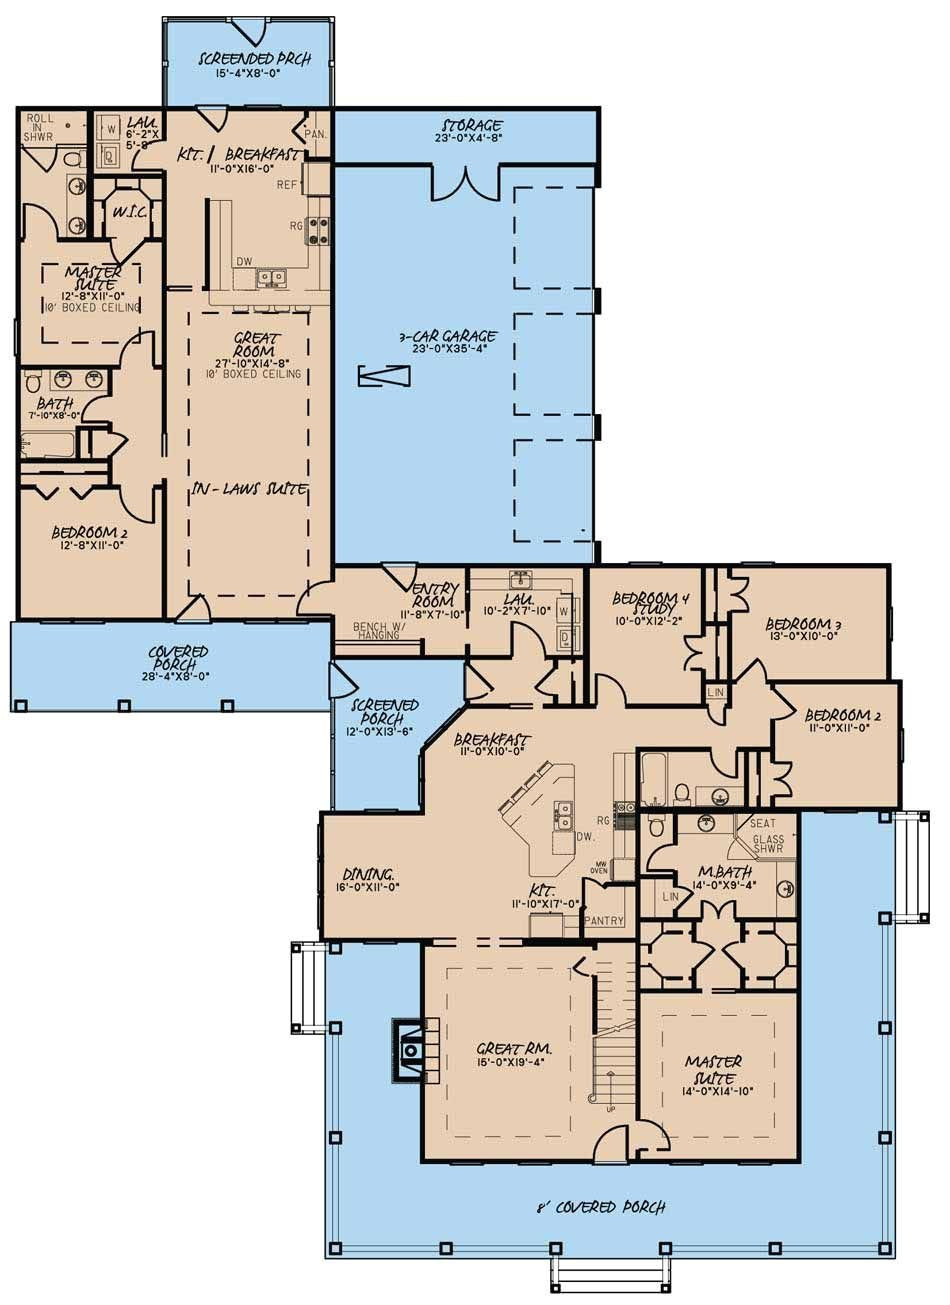 Craftsman Home Plans with Inlaw Suite L Shaped House Plans without Garage Unique Floor Plans